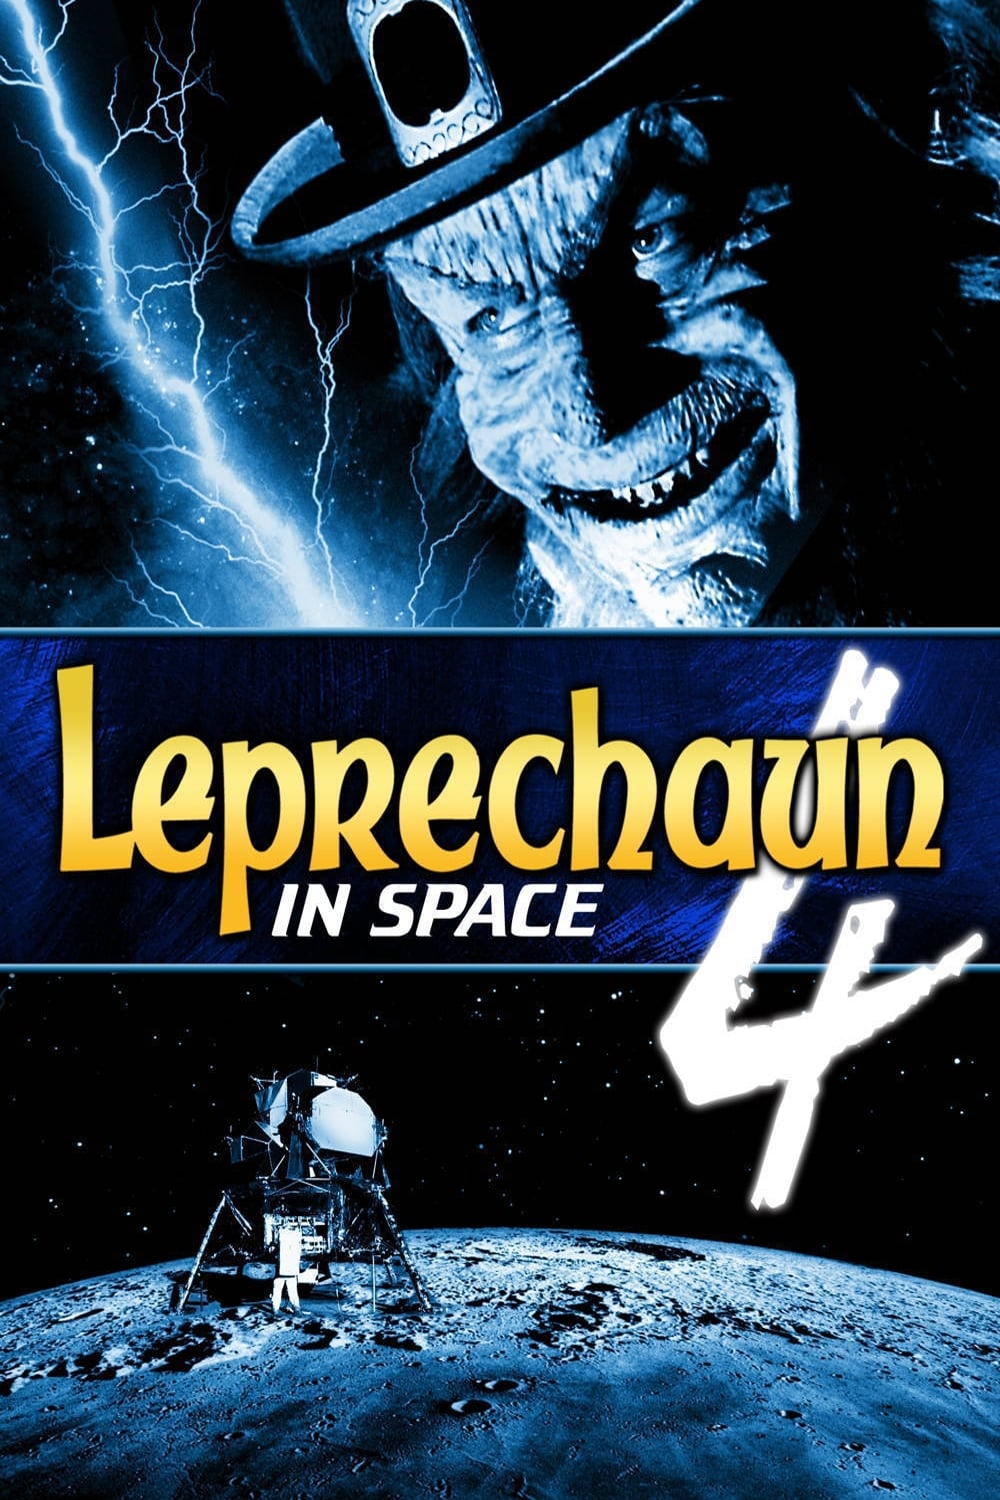 Leprechaun 4 In Space (1996)